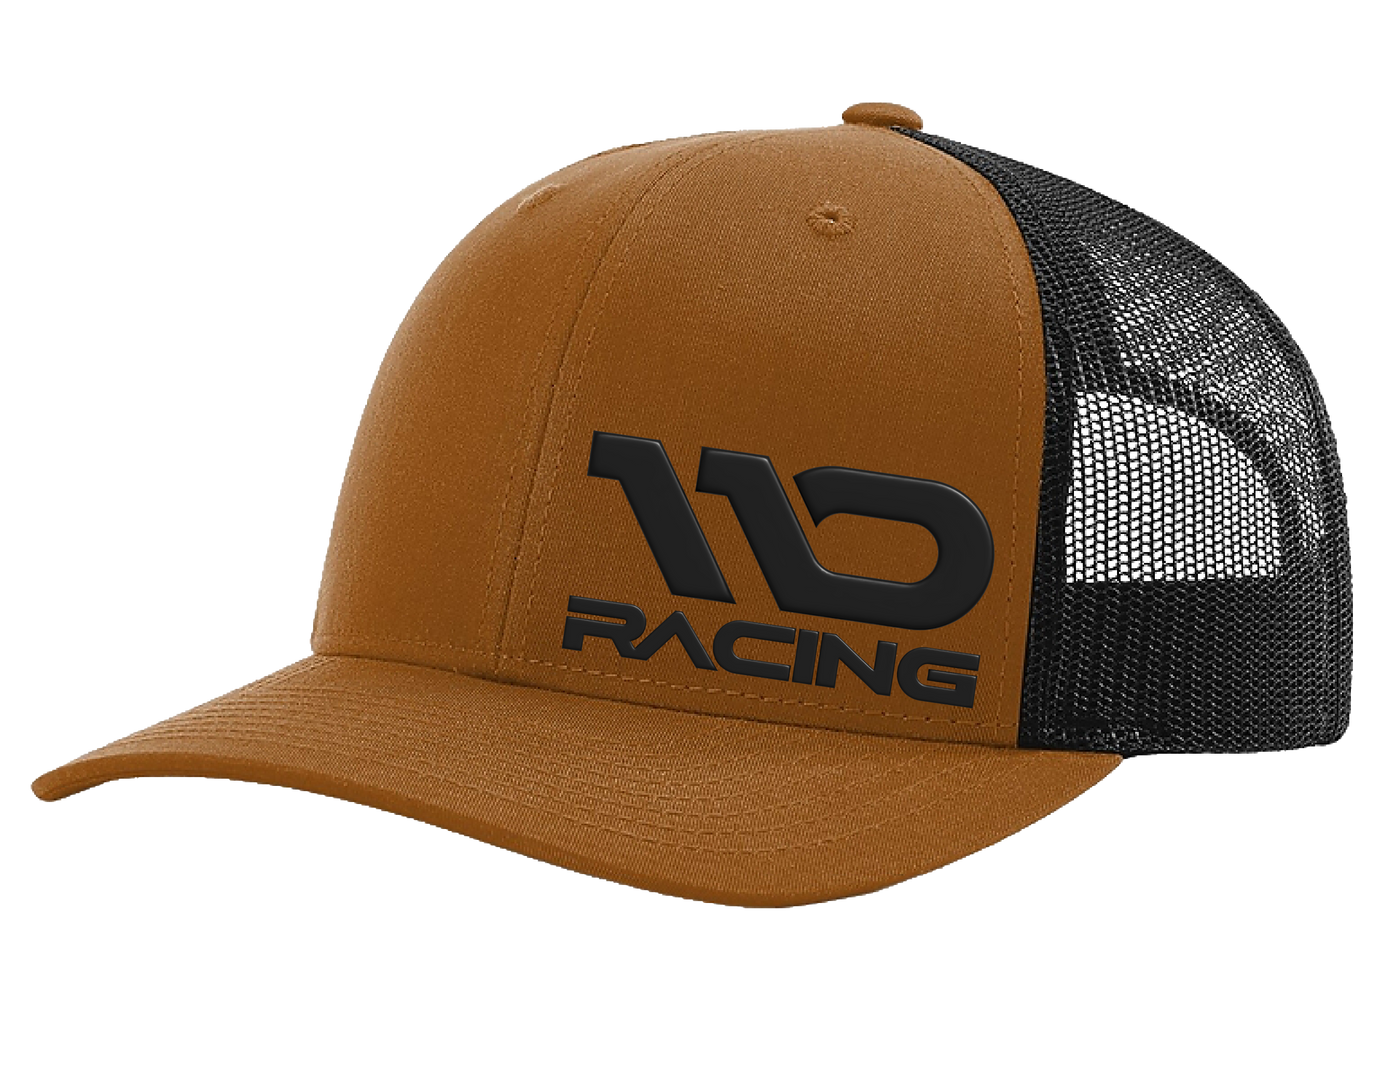 110 RACING // TRUCKER CARAMEL/BLACK HAT